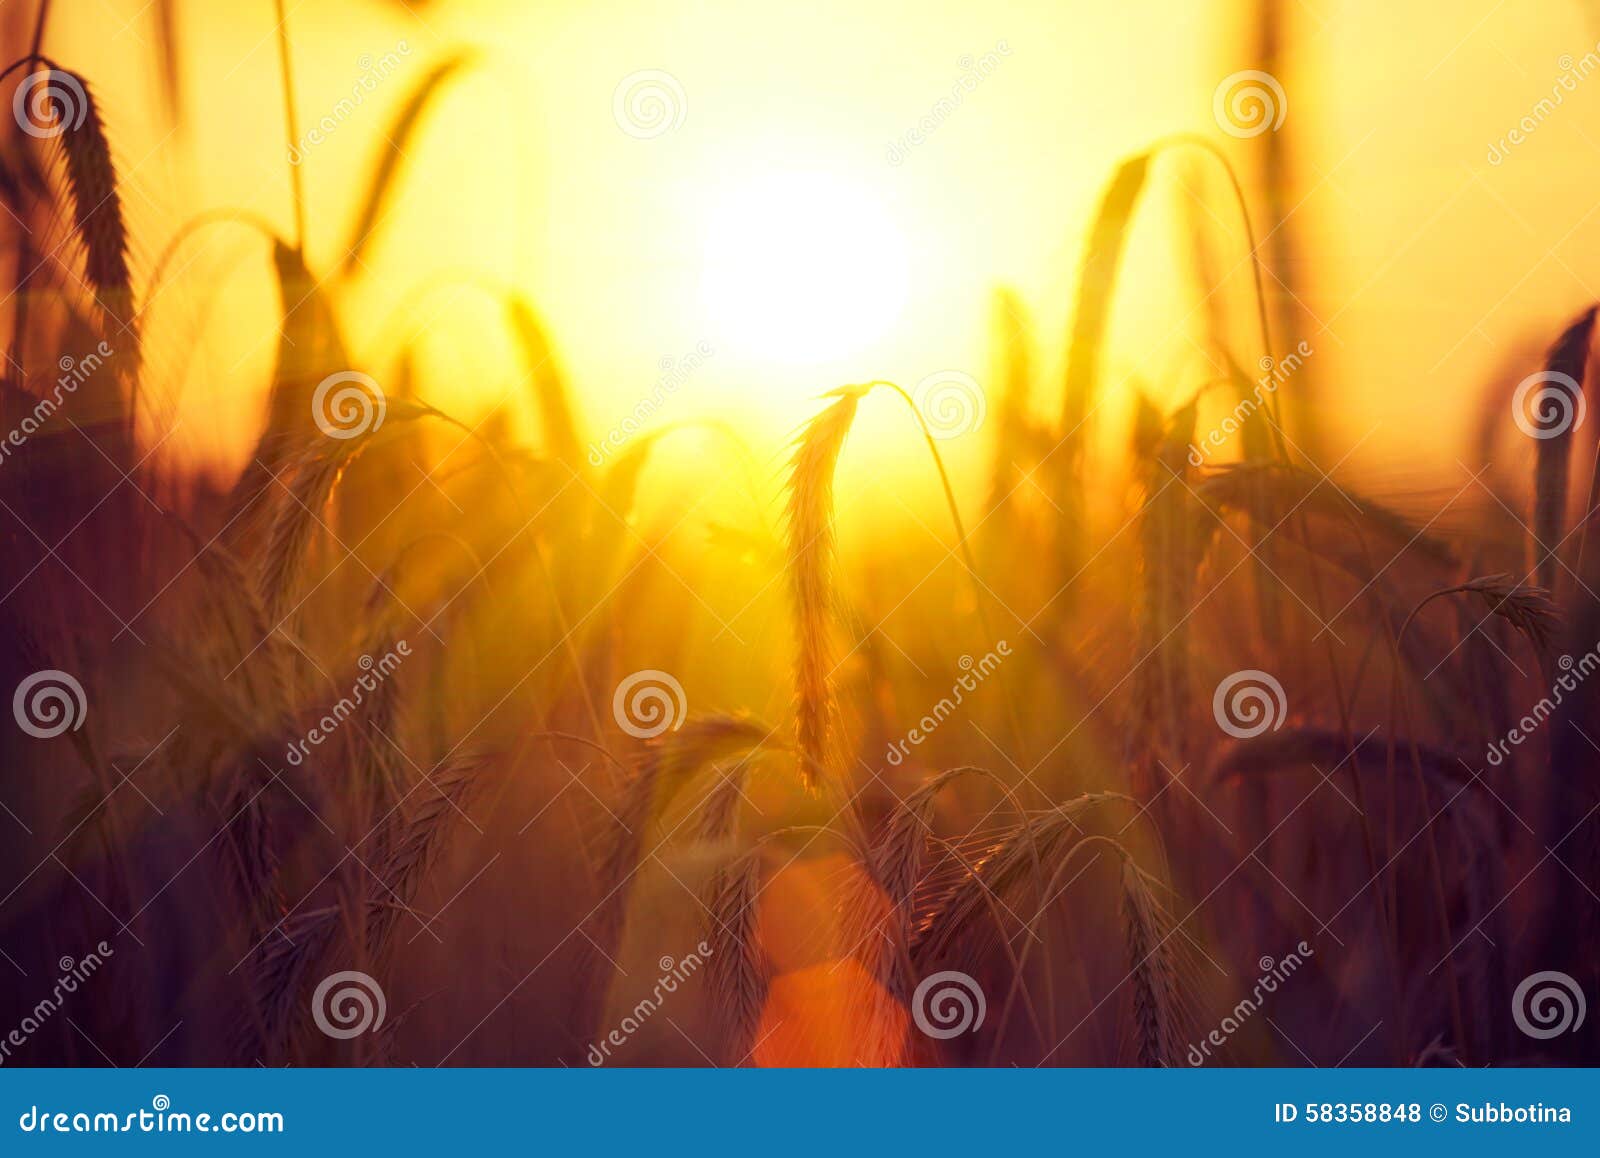 field of dry golden wheat. harvest